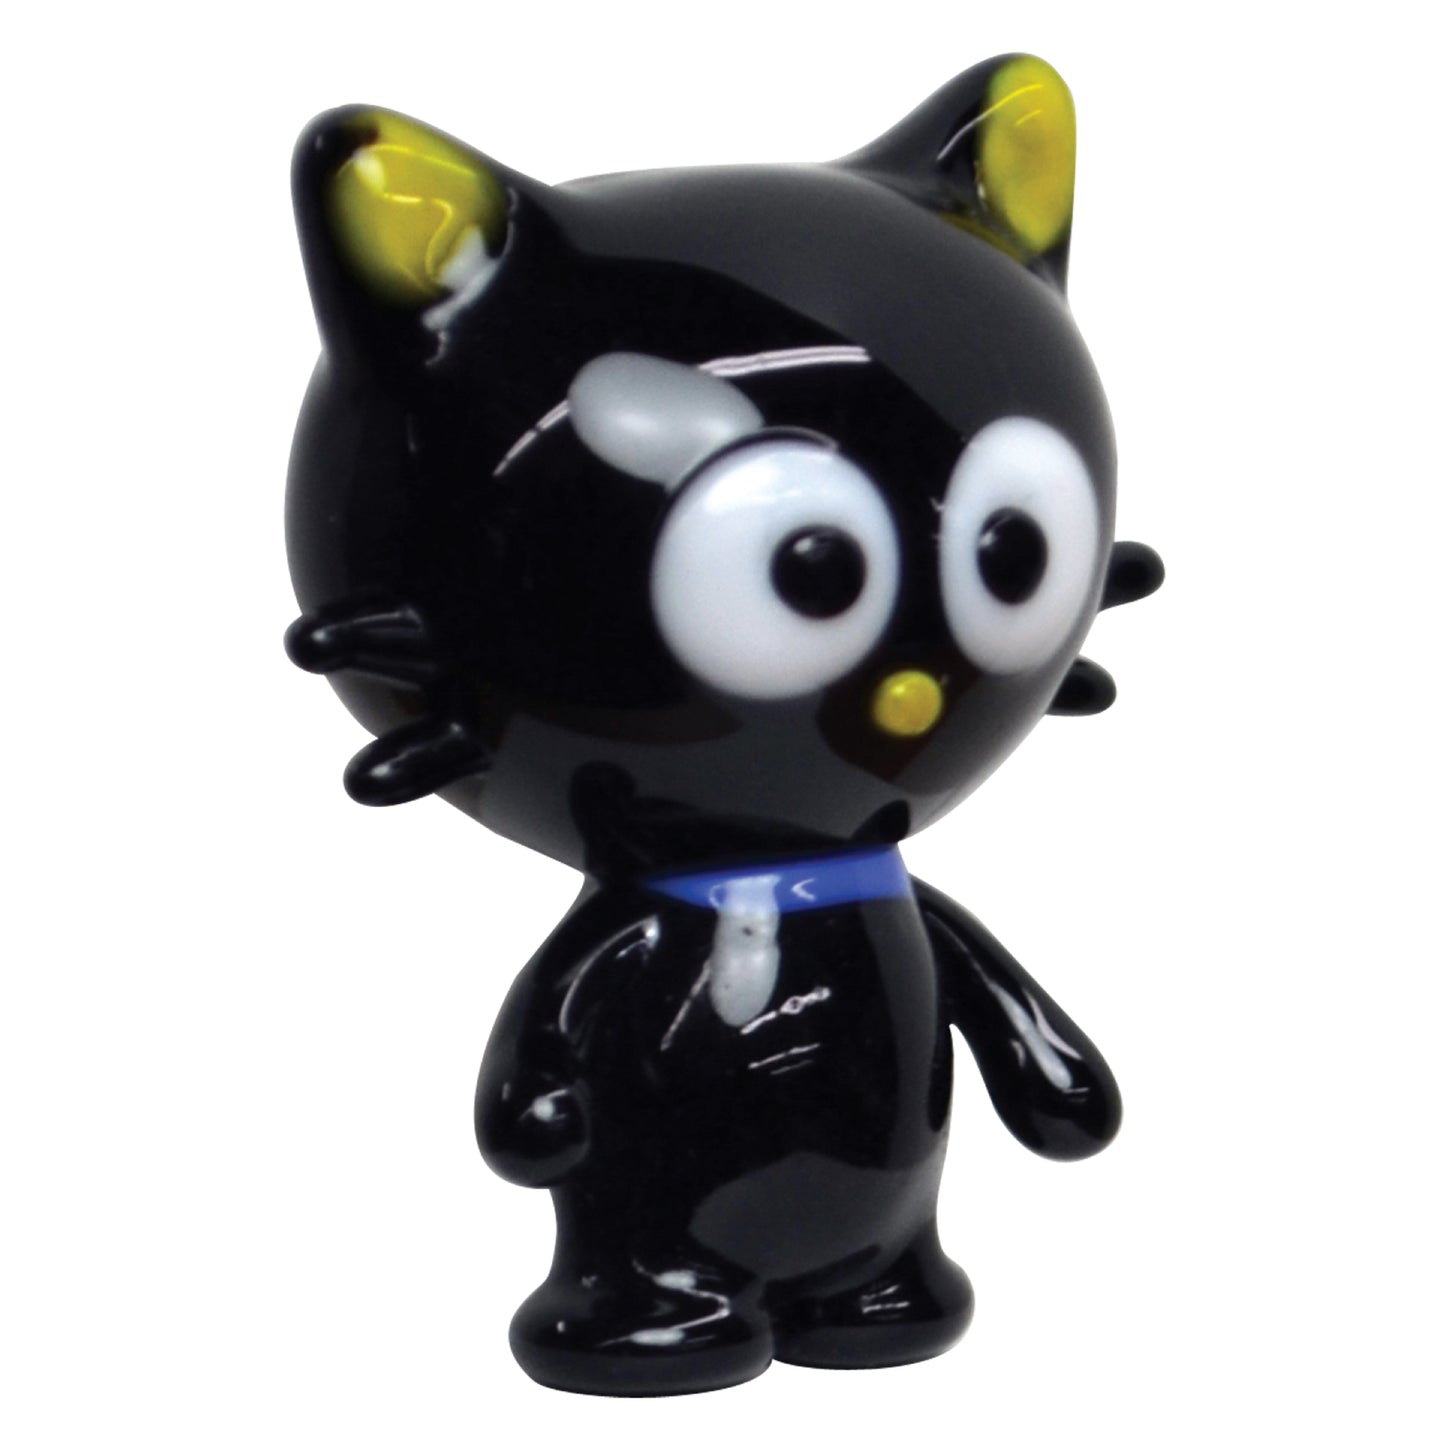 GlassWorld Hello Kitty Chococat collectible miniature glass figurine Product Image